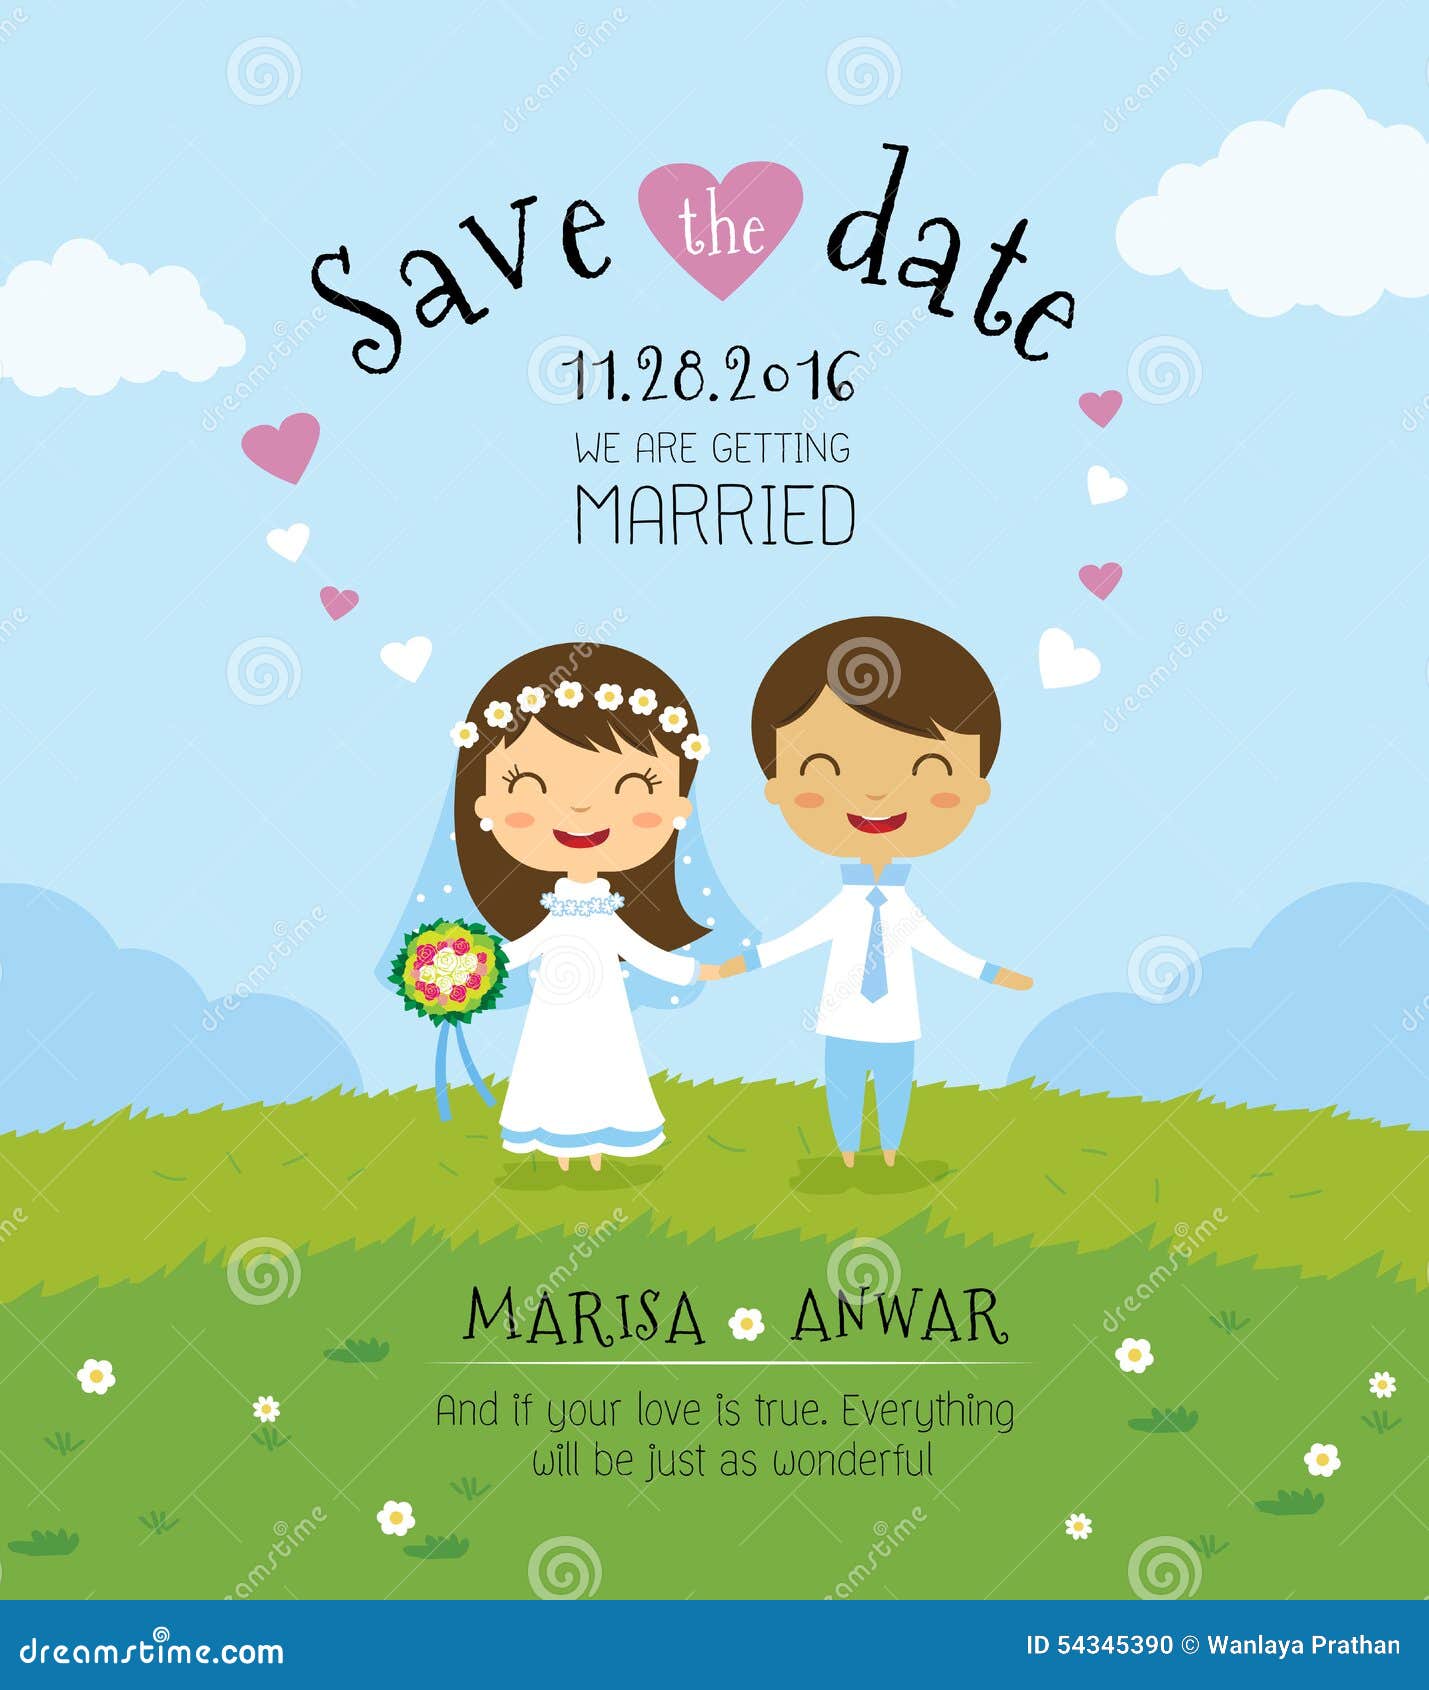 Cartoon Wedding Invitation Card Template Stock Vector - Illustration of  nature, heart: 54345390